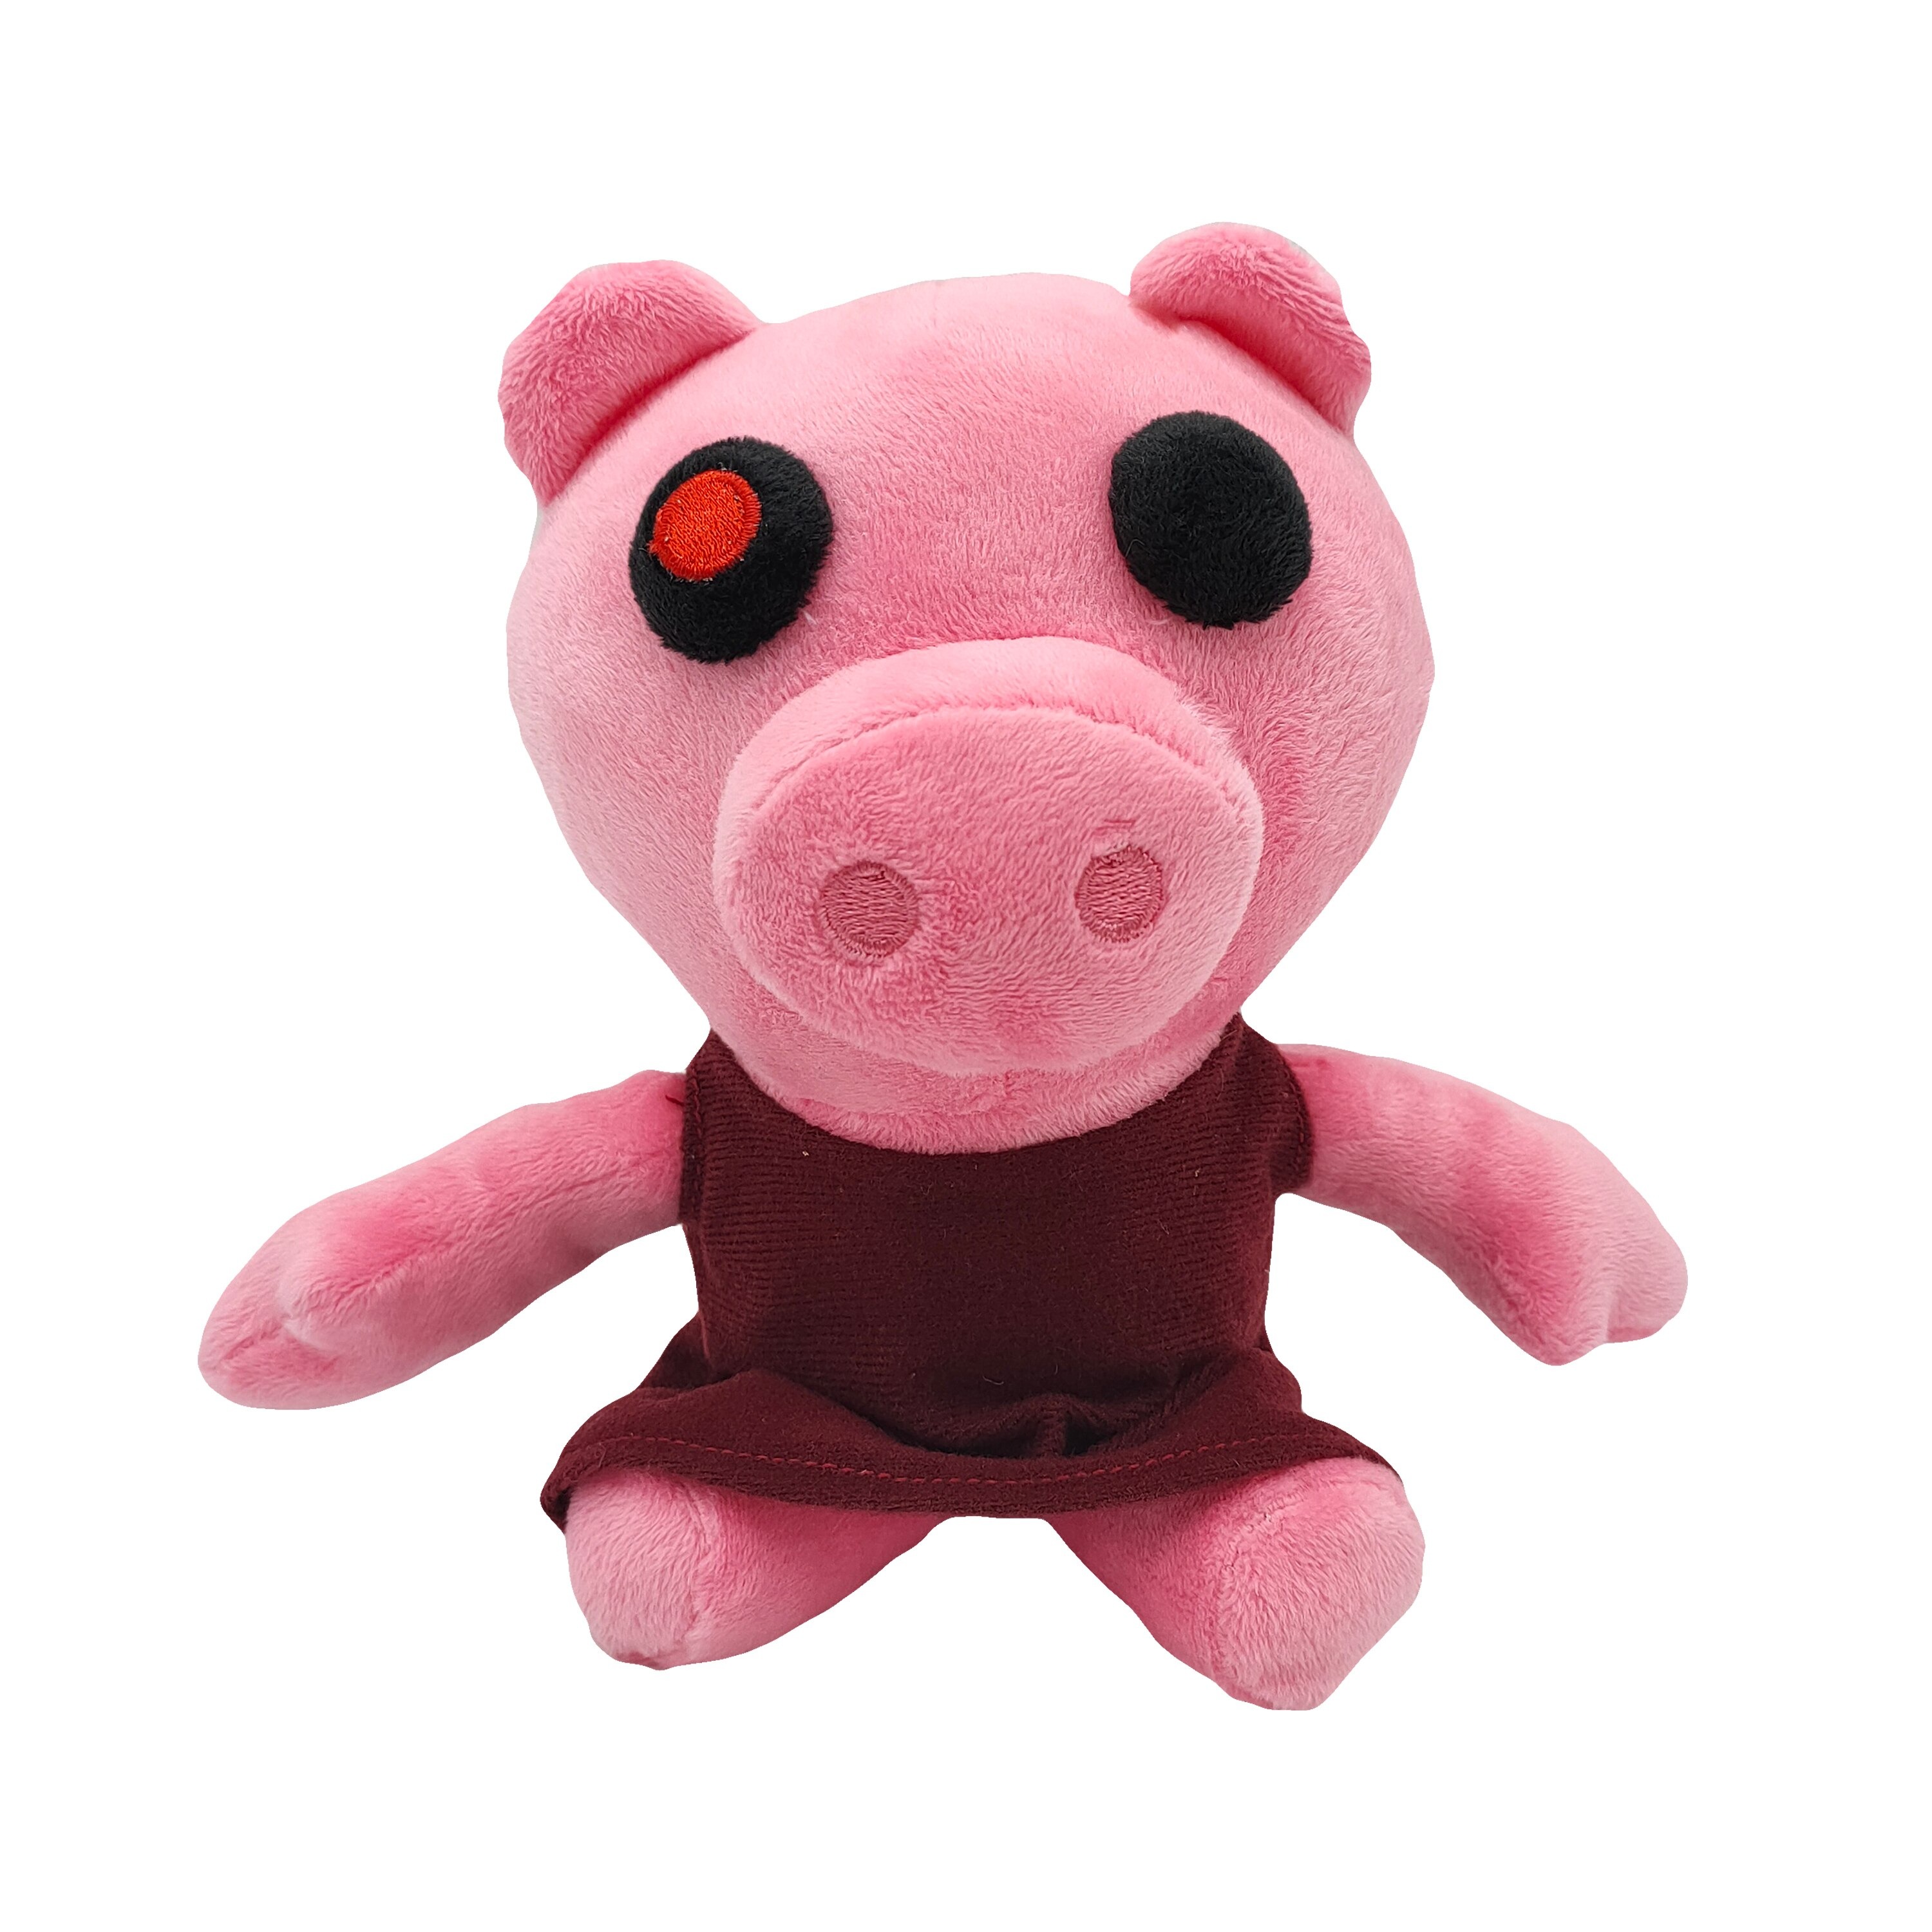 Piggy pink 20 cm new cute soft robloxed world advent variants 1 1 - Piggy Plush